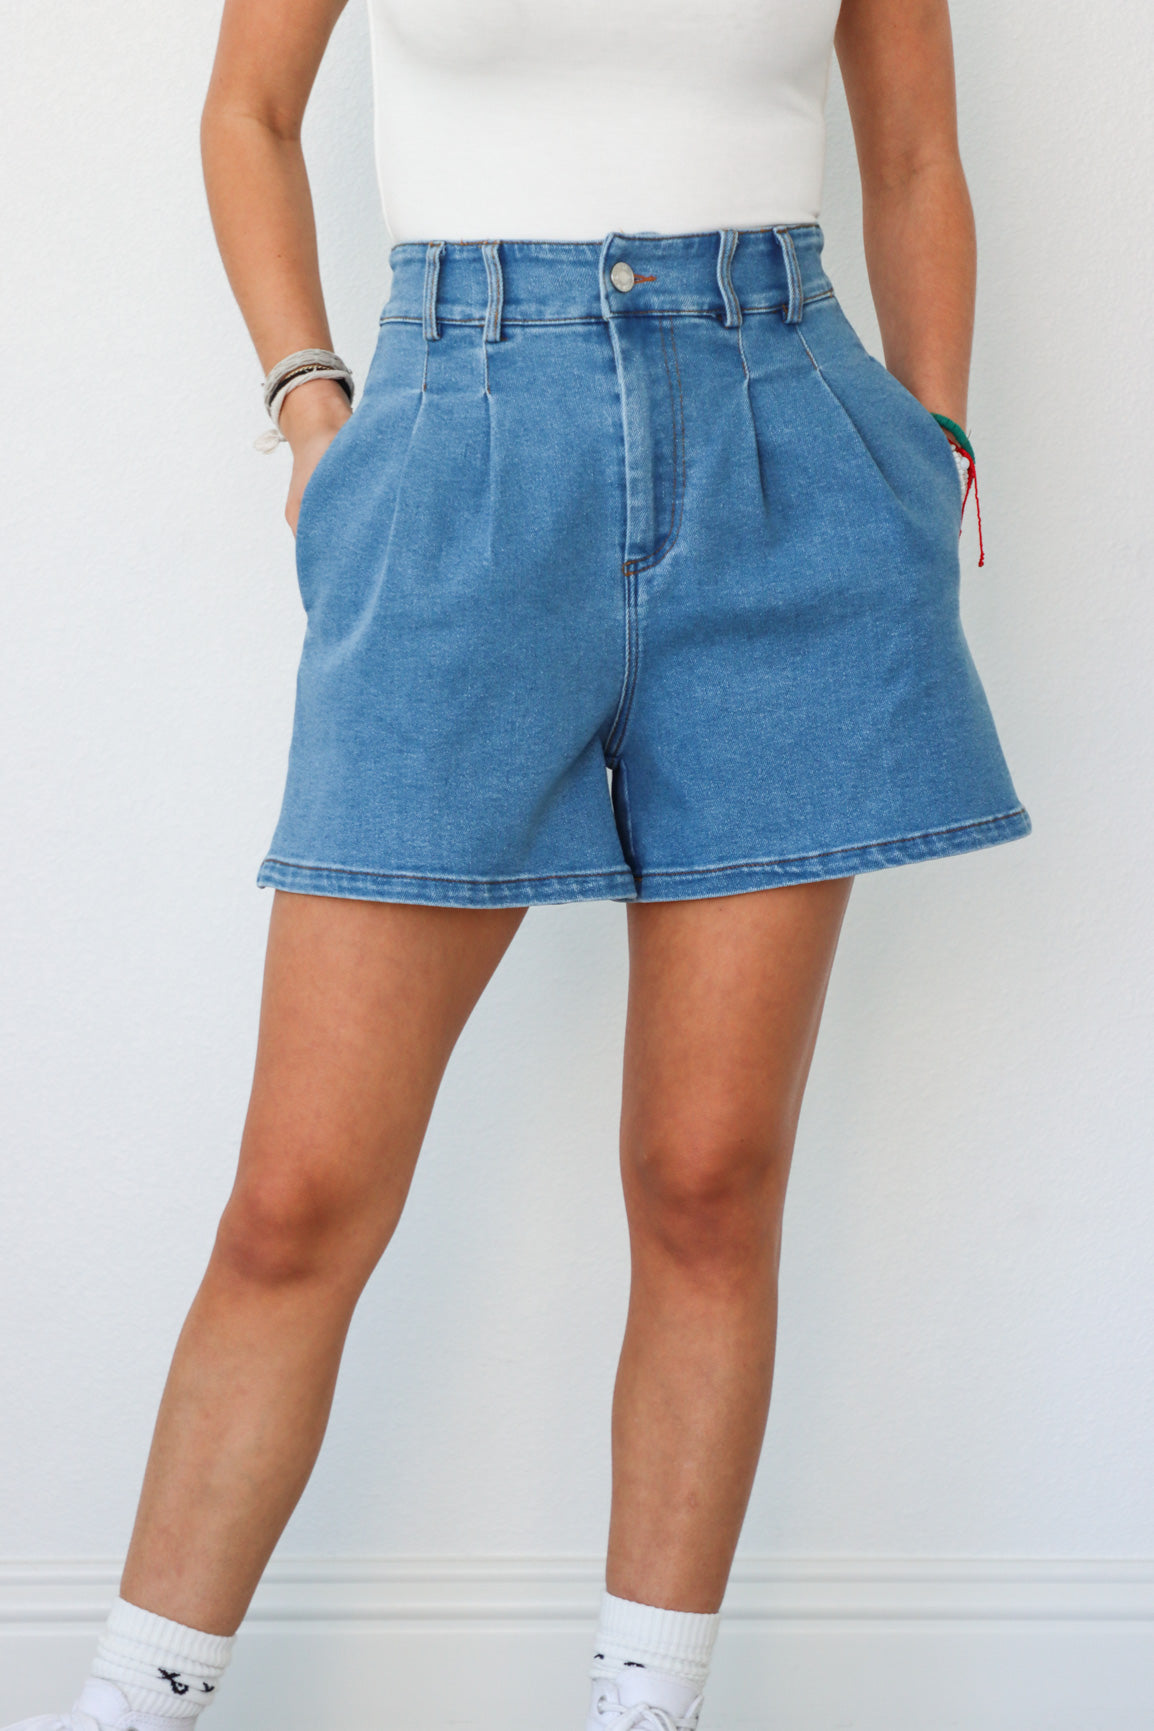 girl wearing blue denim jean shorts